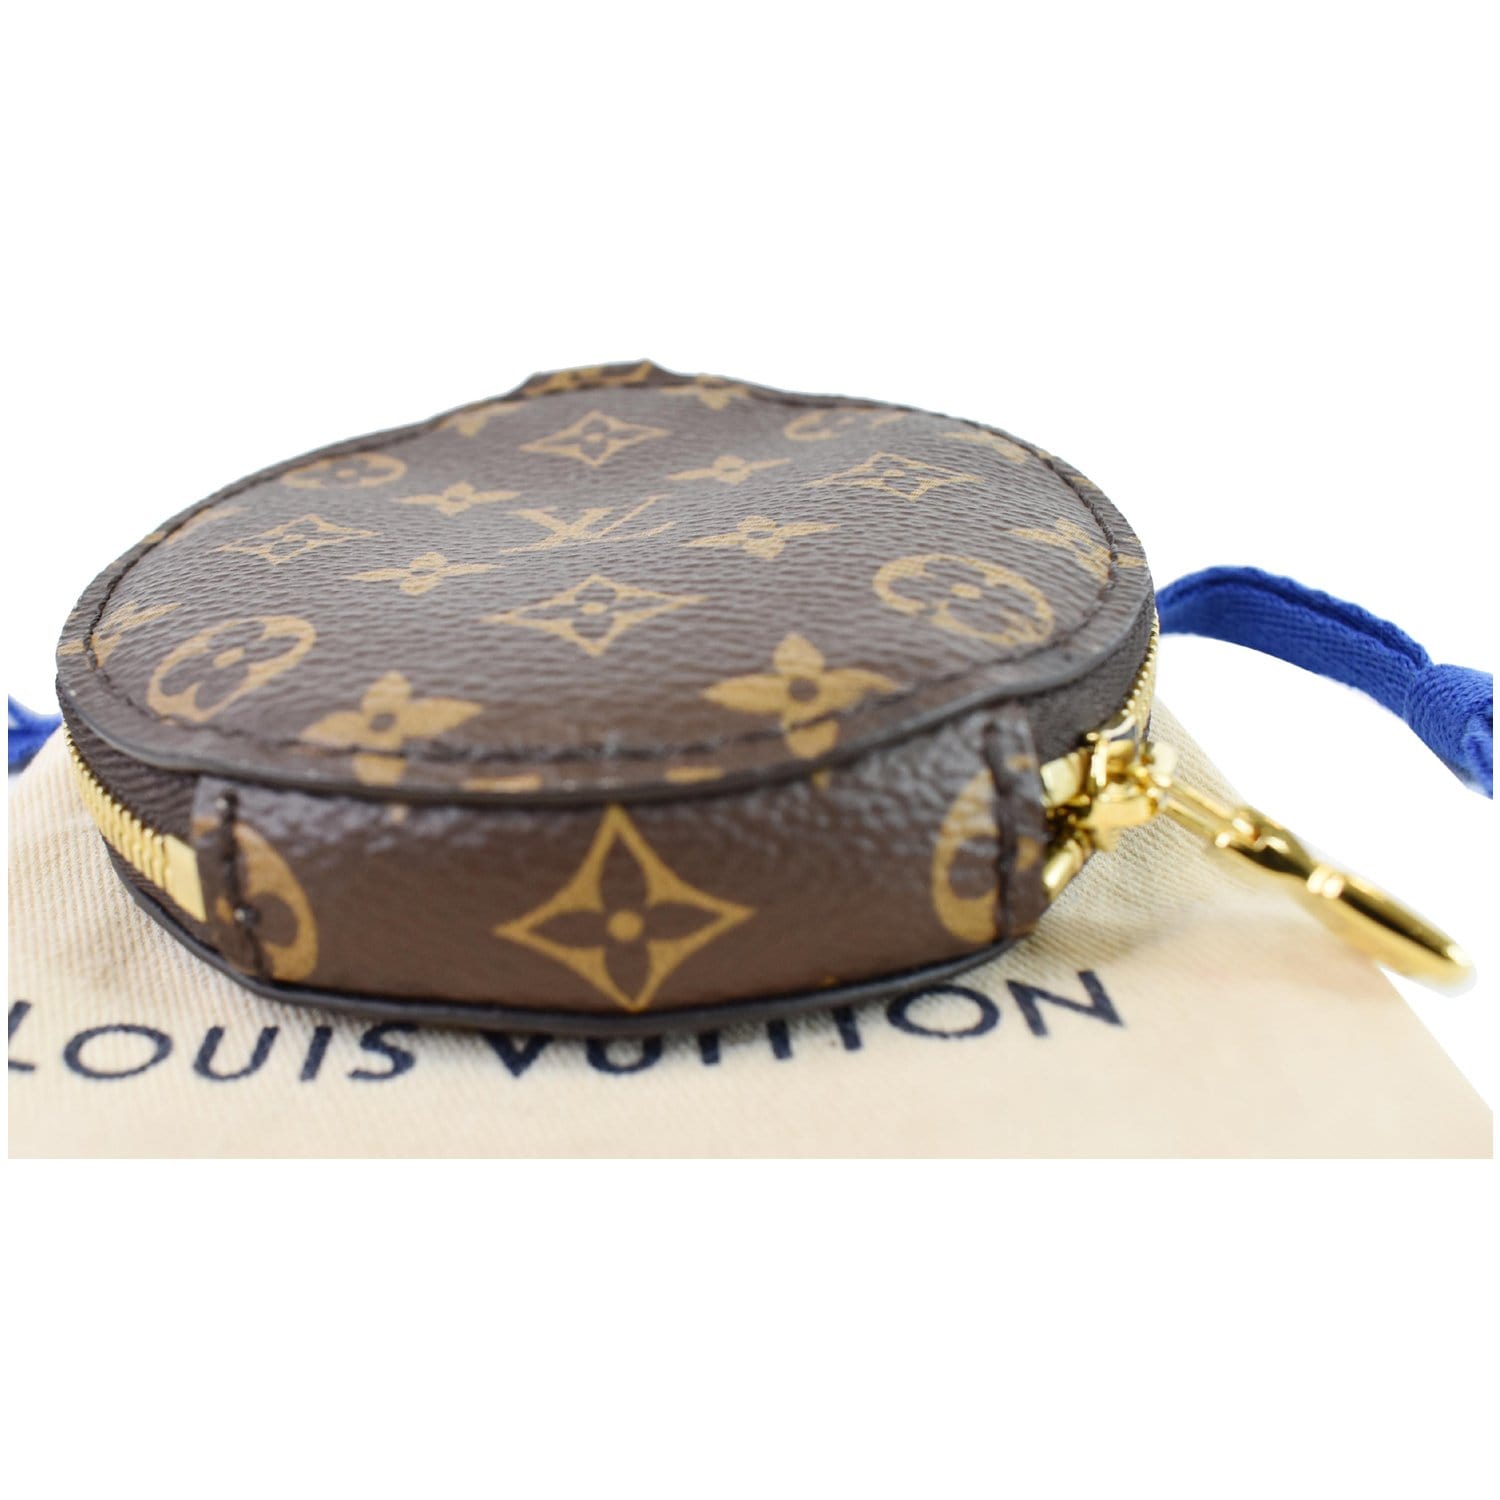 New Arrival ❗️Round coin purse 20 colors complete❤️ ☀️Louis Vuitton lv